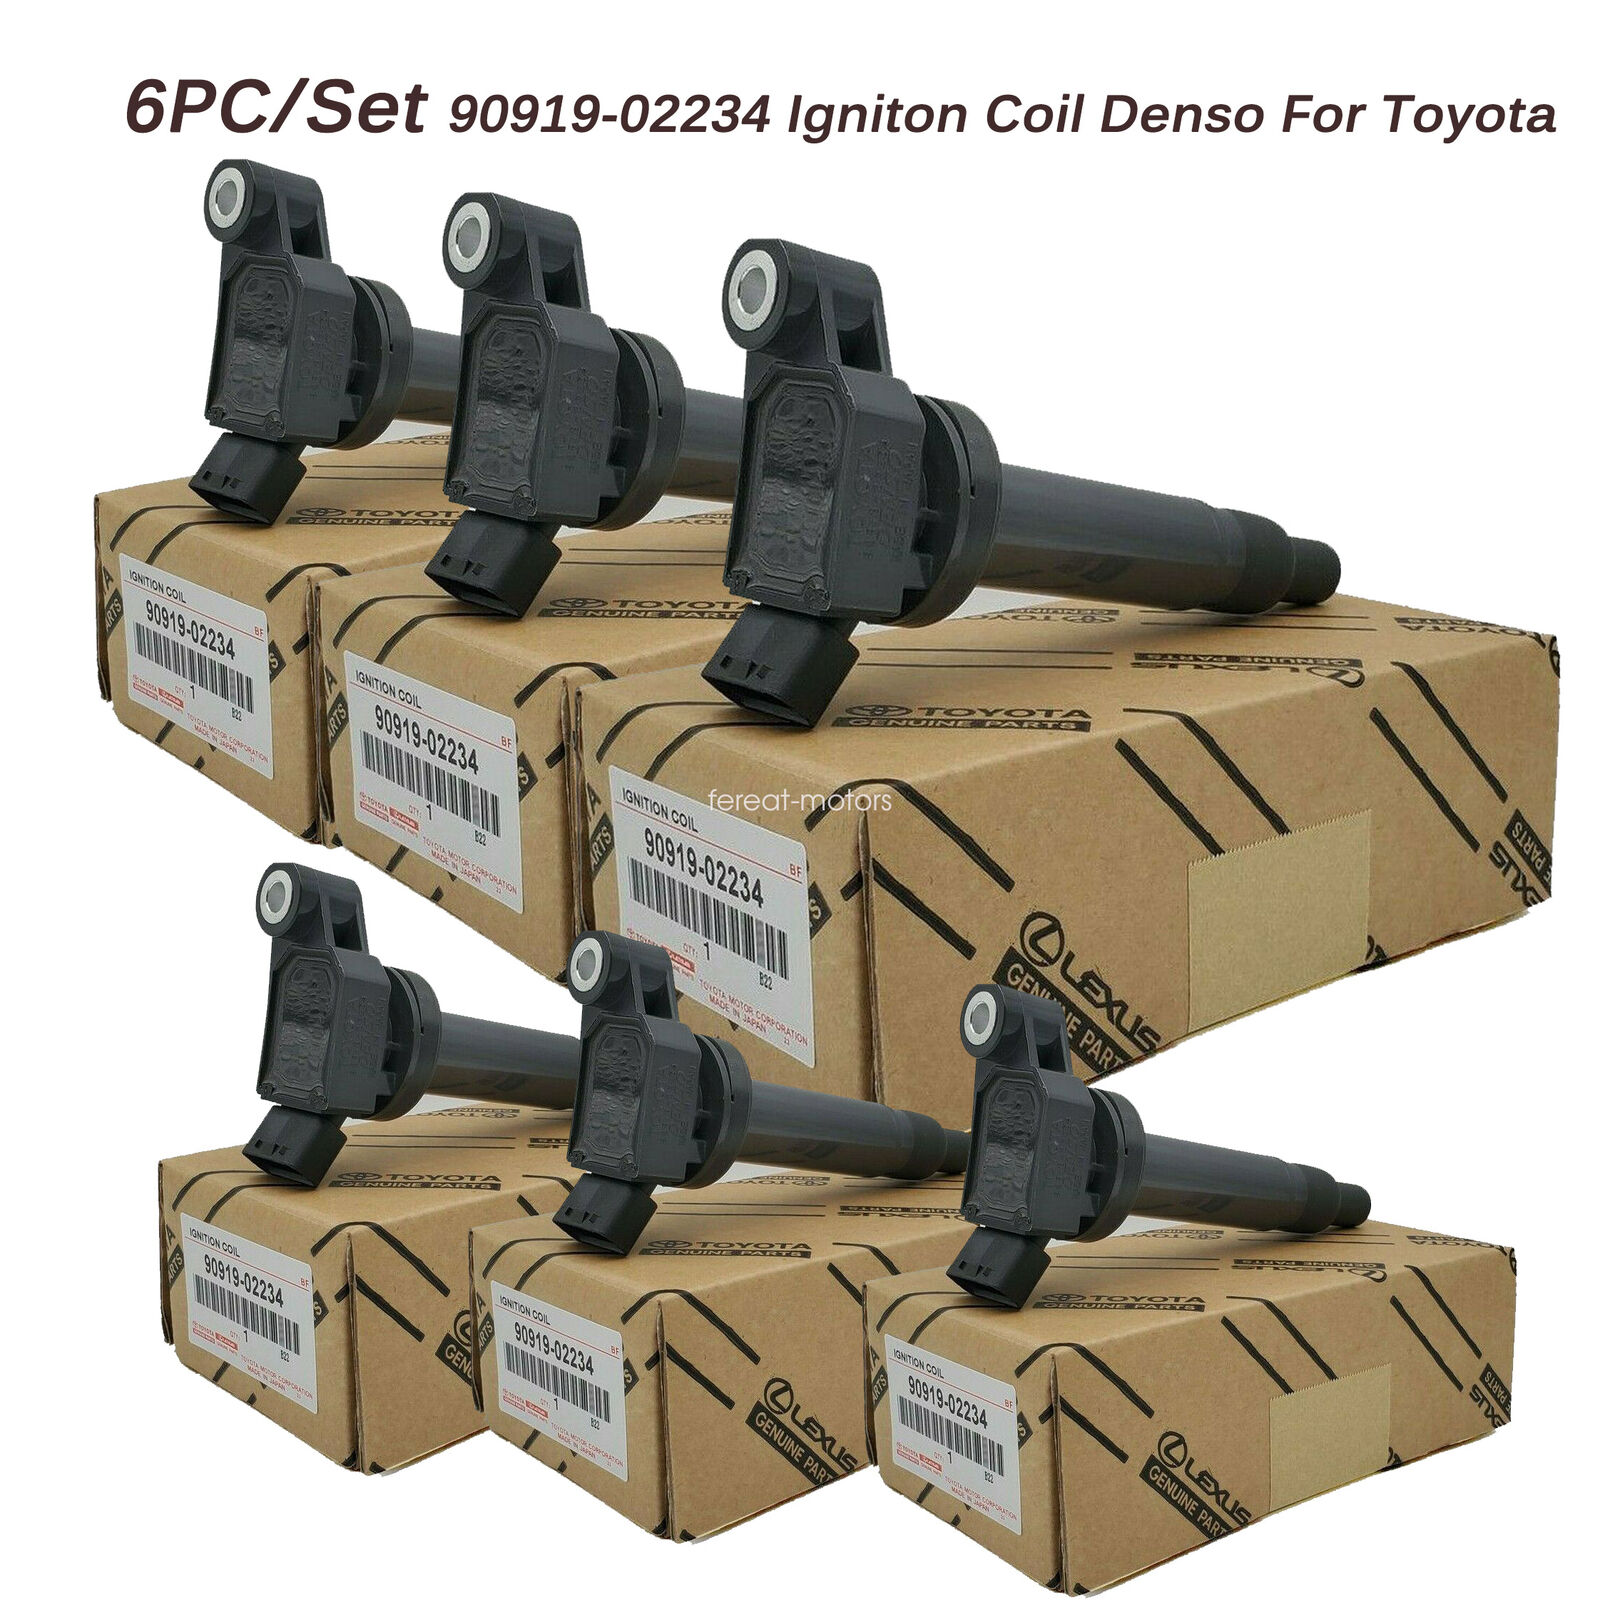 6PC/PACK Genuine Igintion Coils for Toyota Lexus 90919-02234 Denso 673-1301